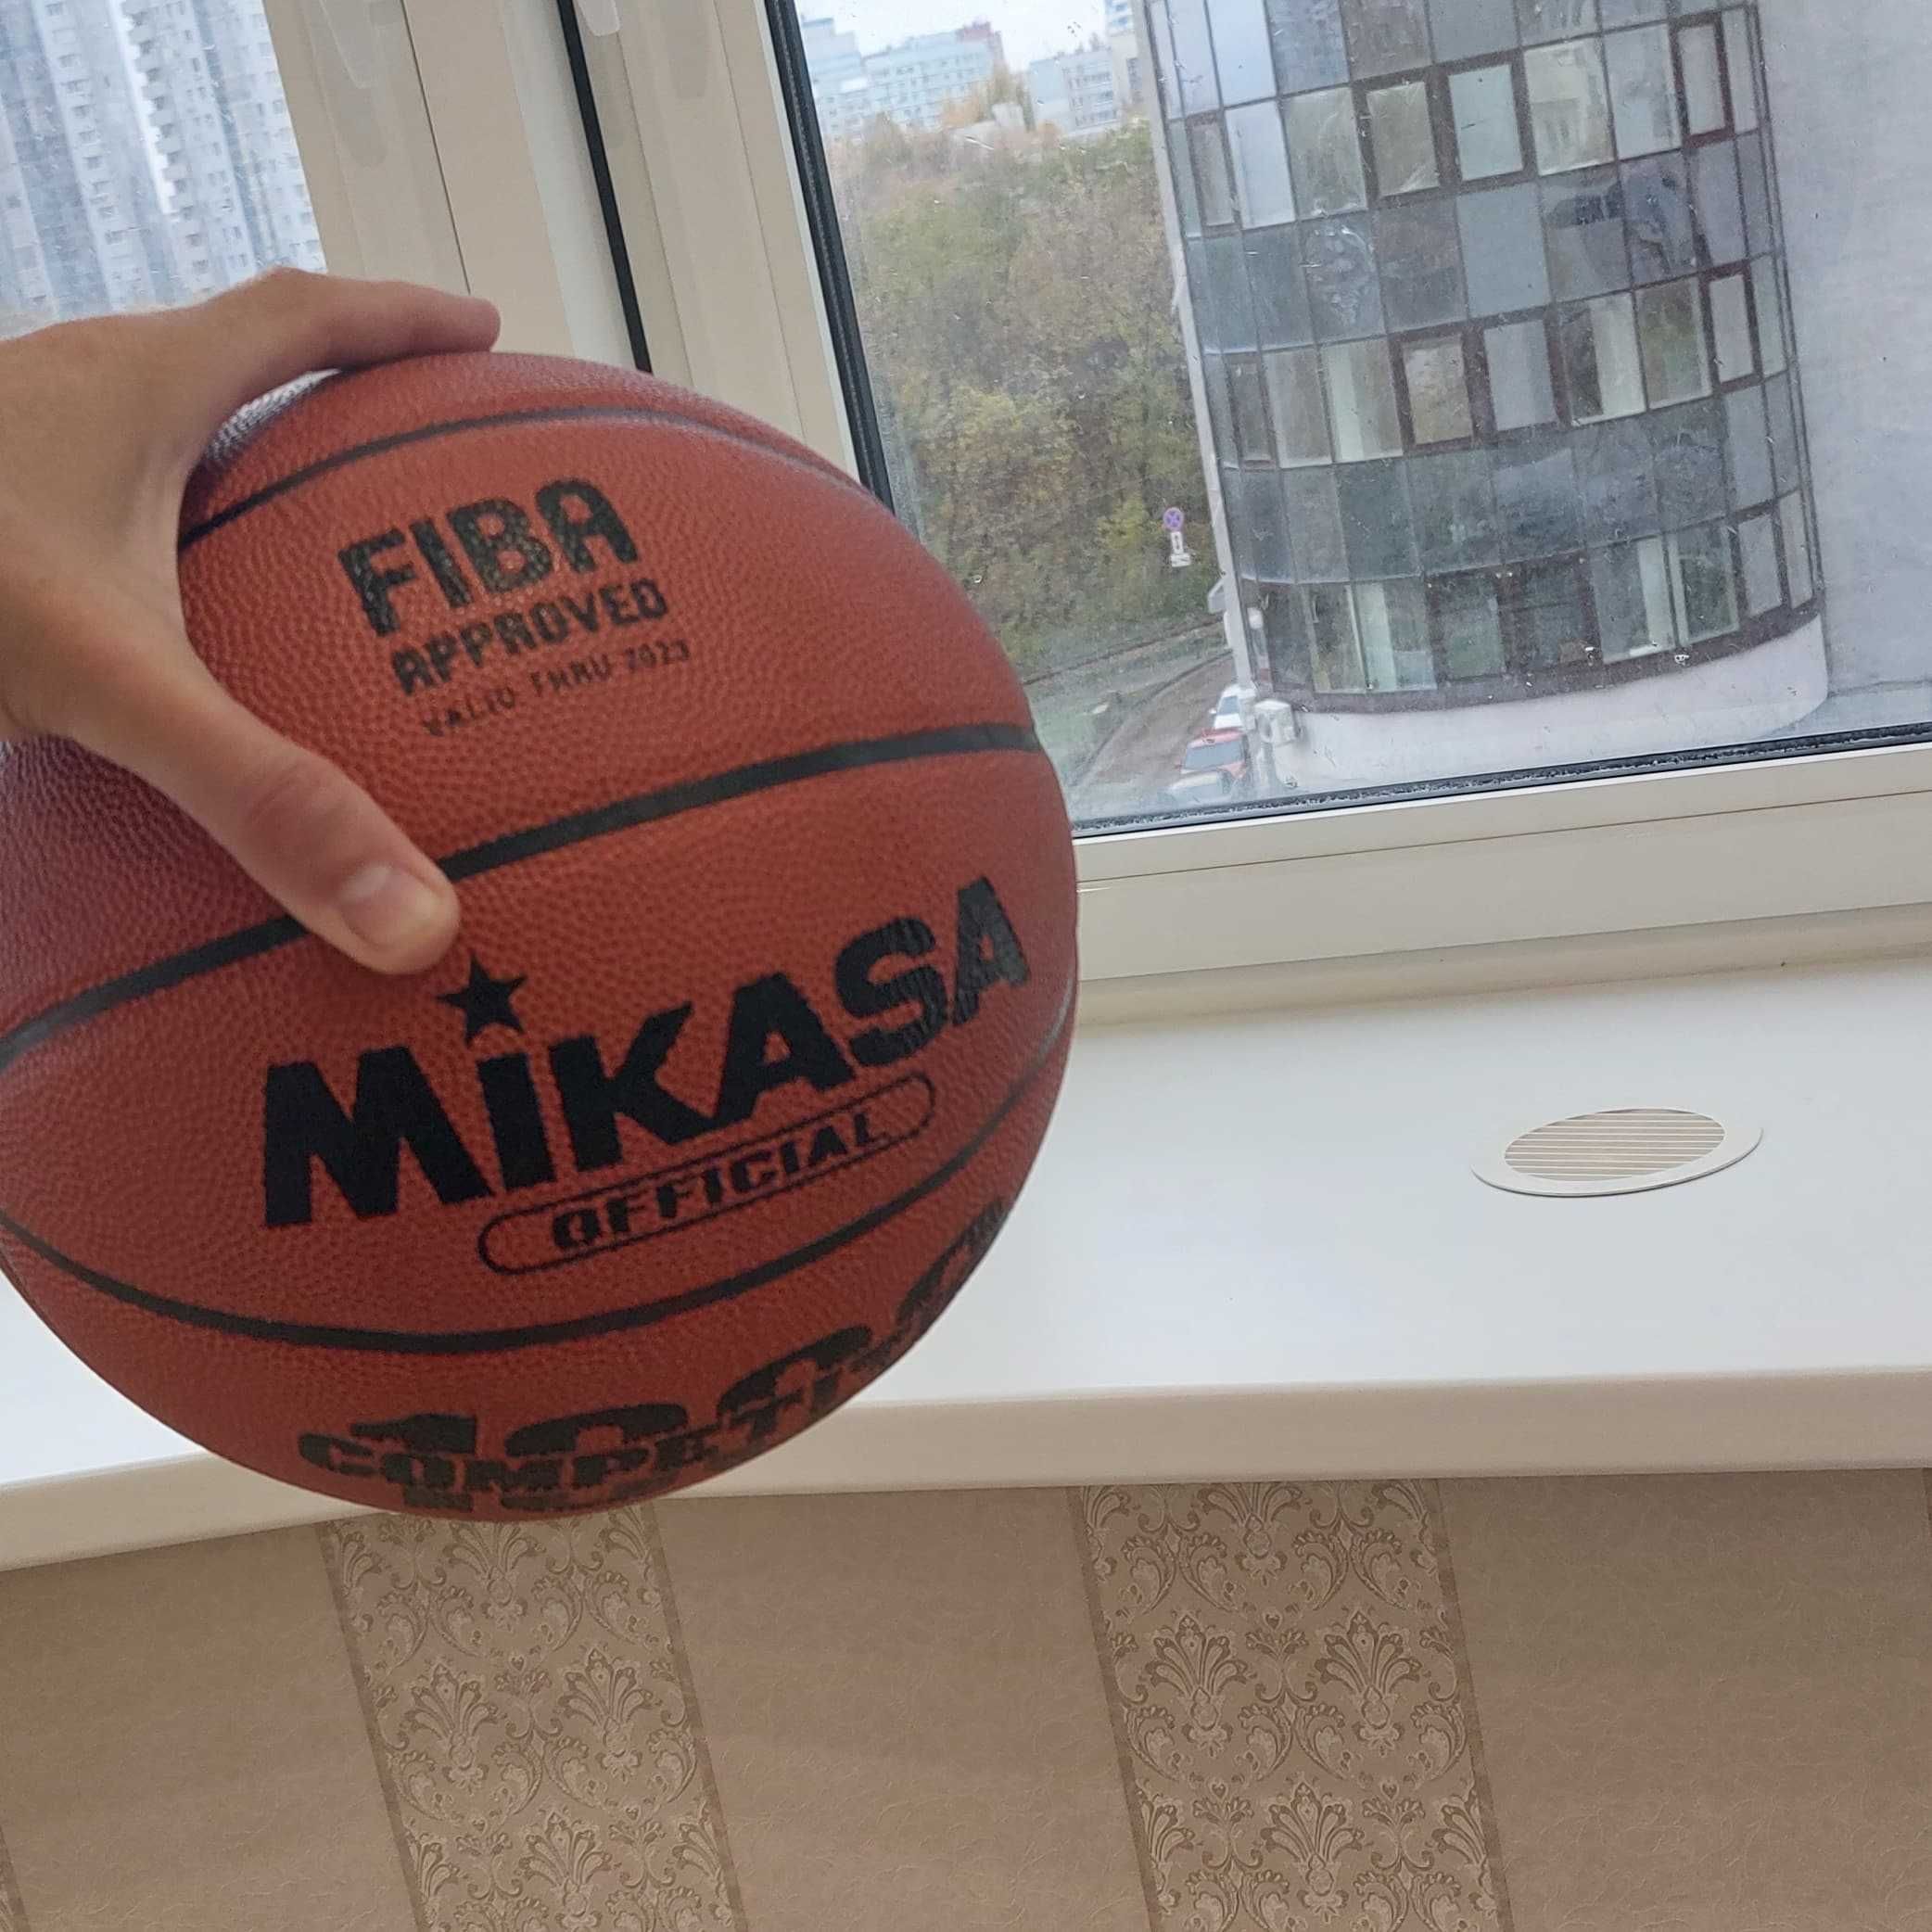 Продам мячи Mikasa оригинал v200w/v300w/bv550c/bq1000